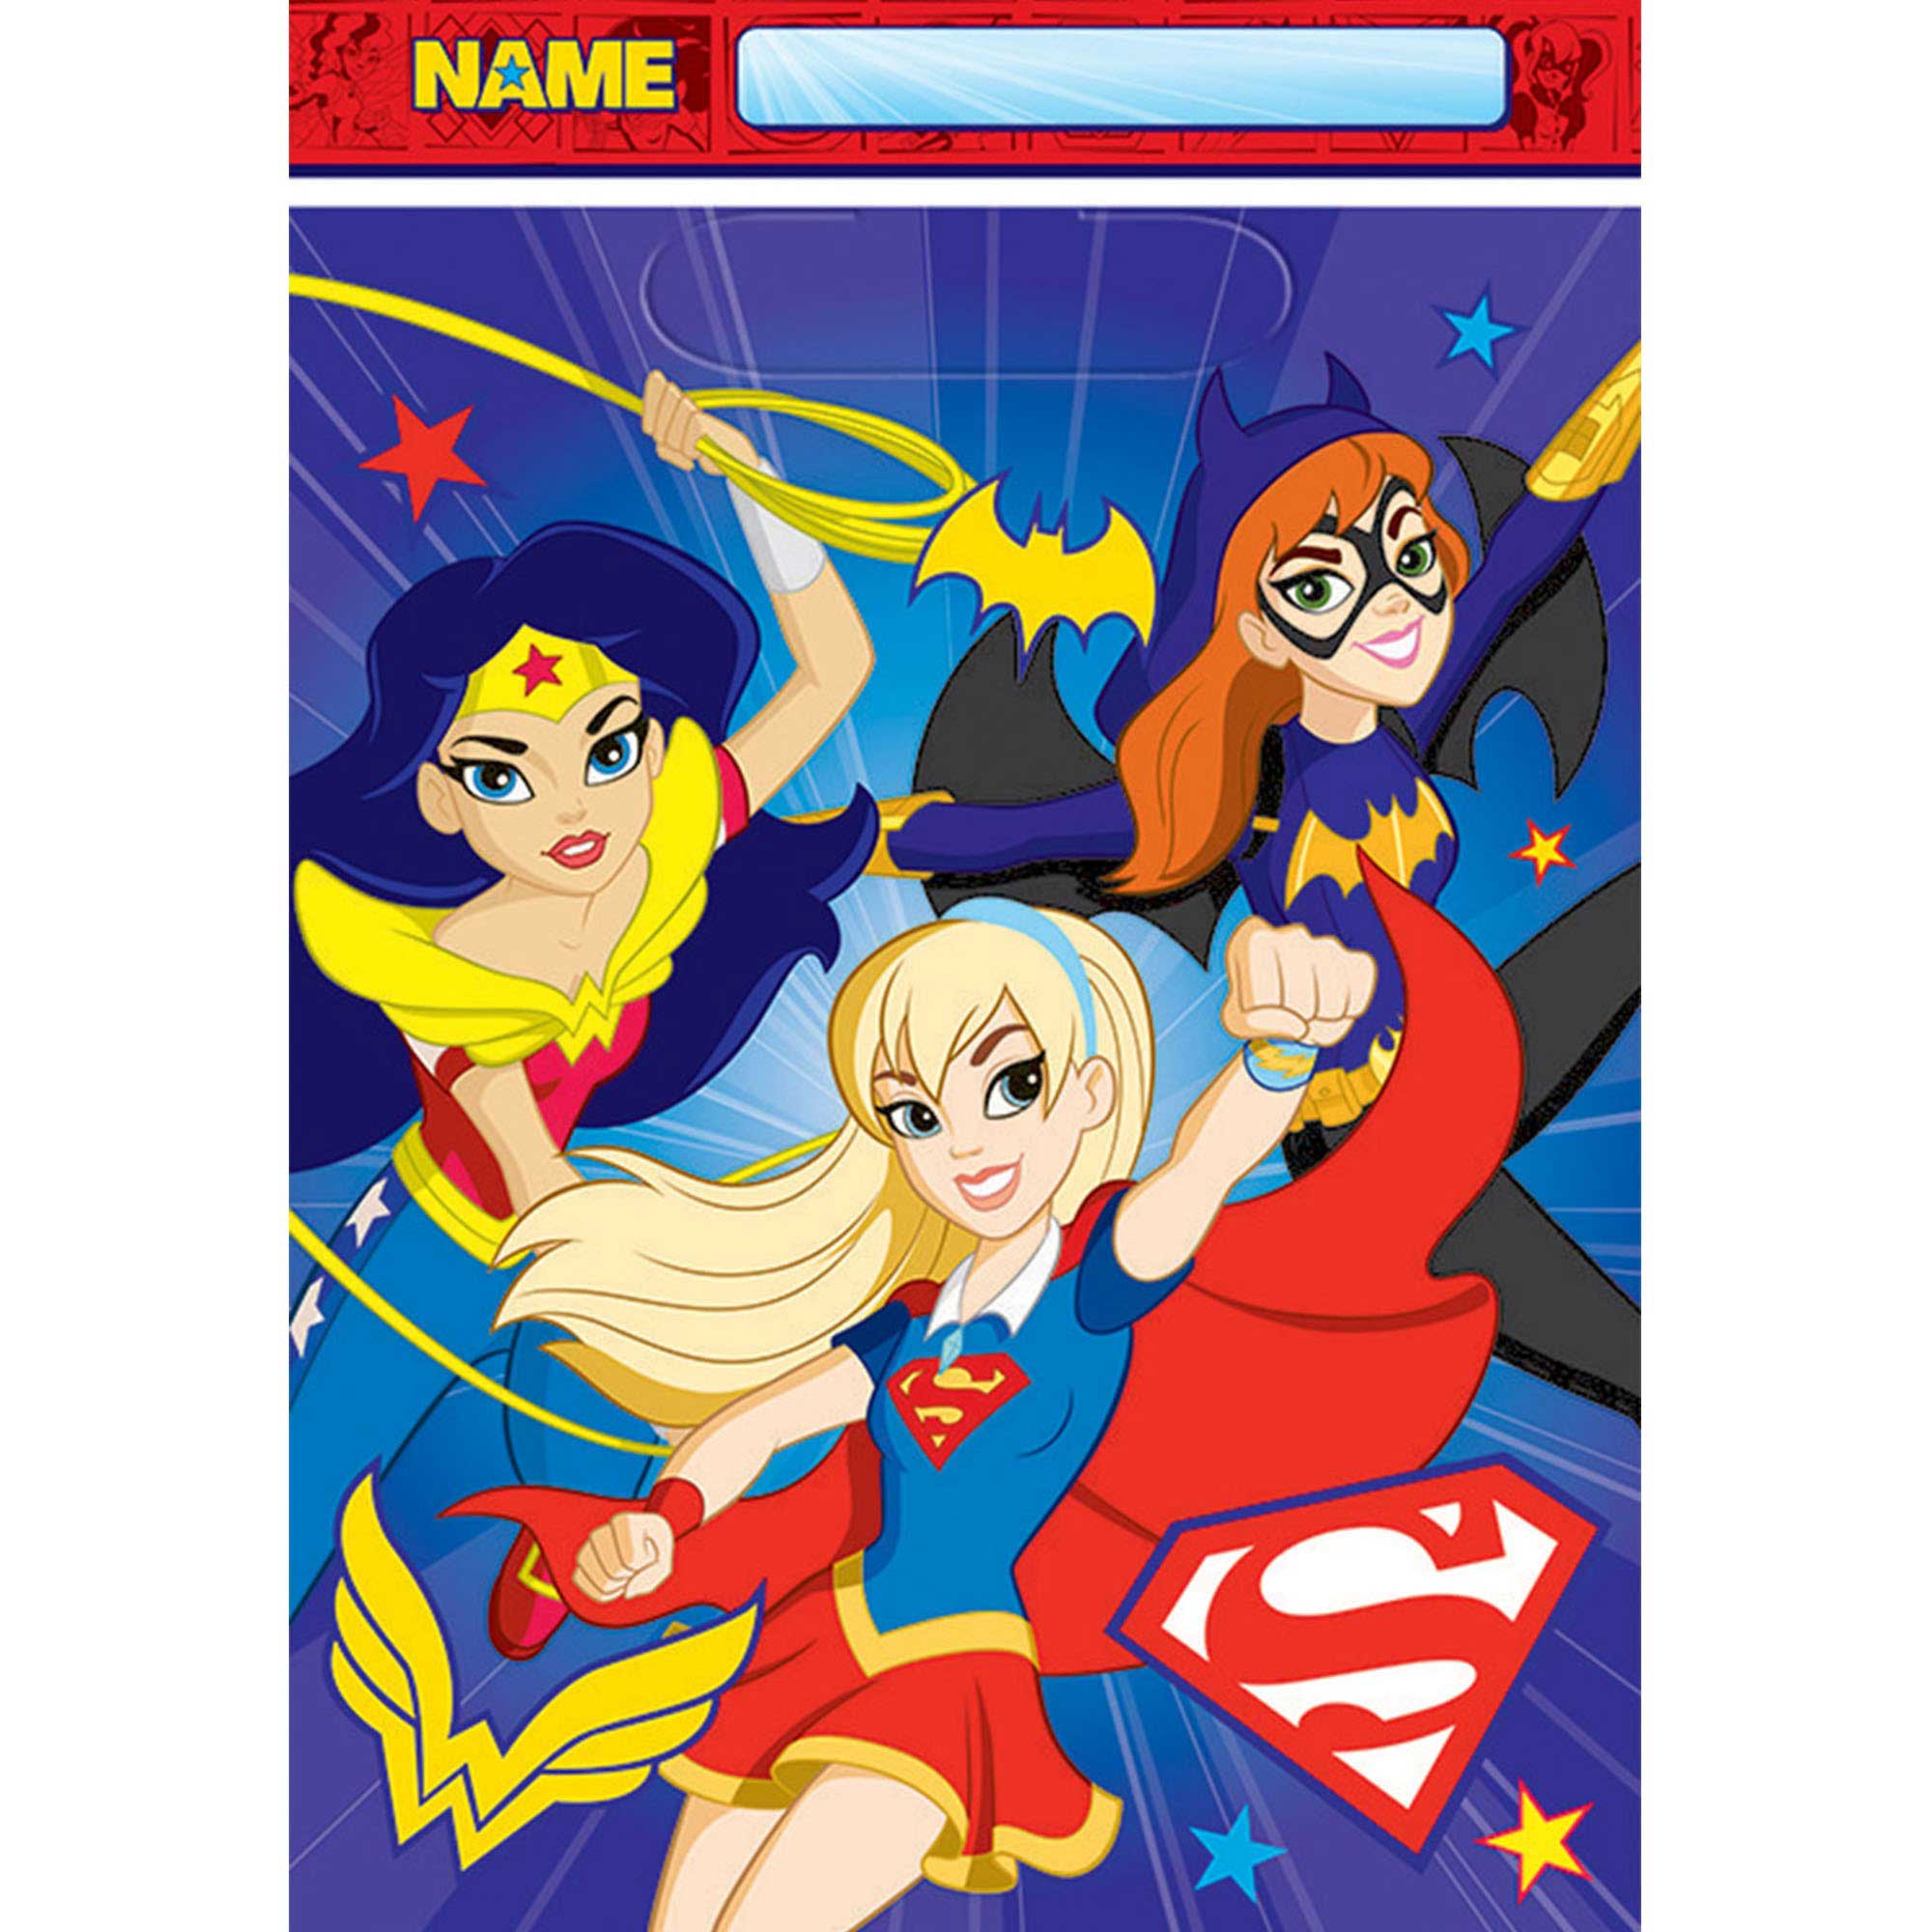 DC Superhero Girls Favor Container